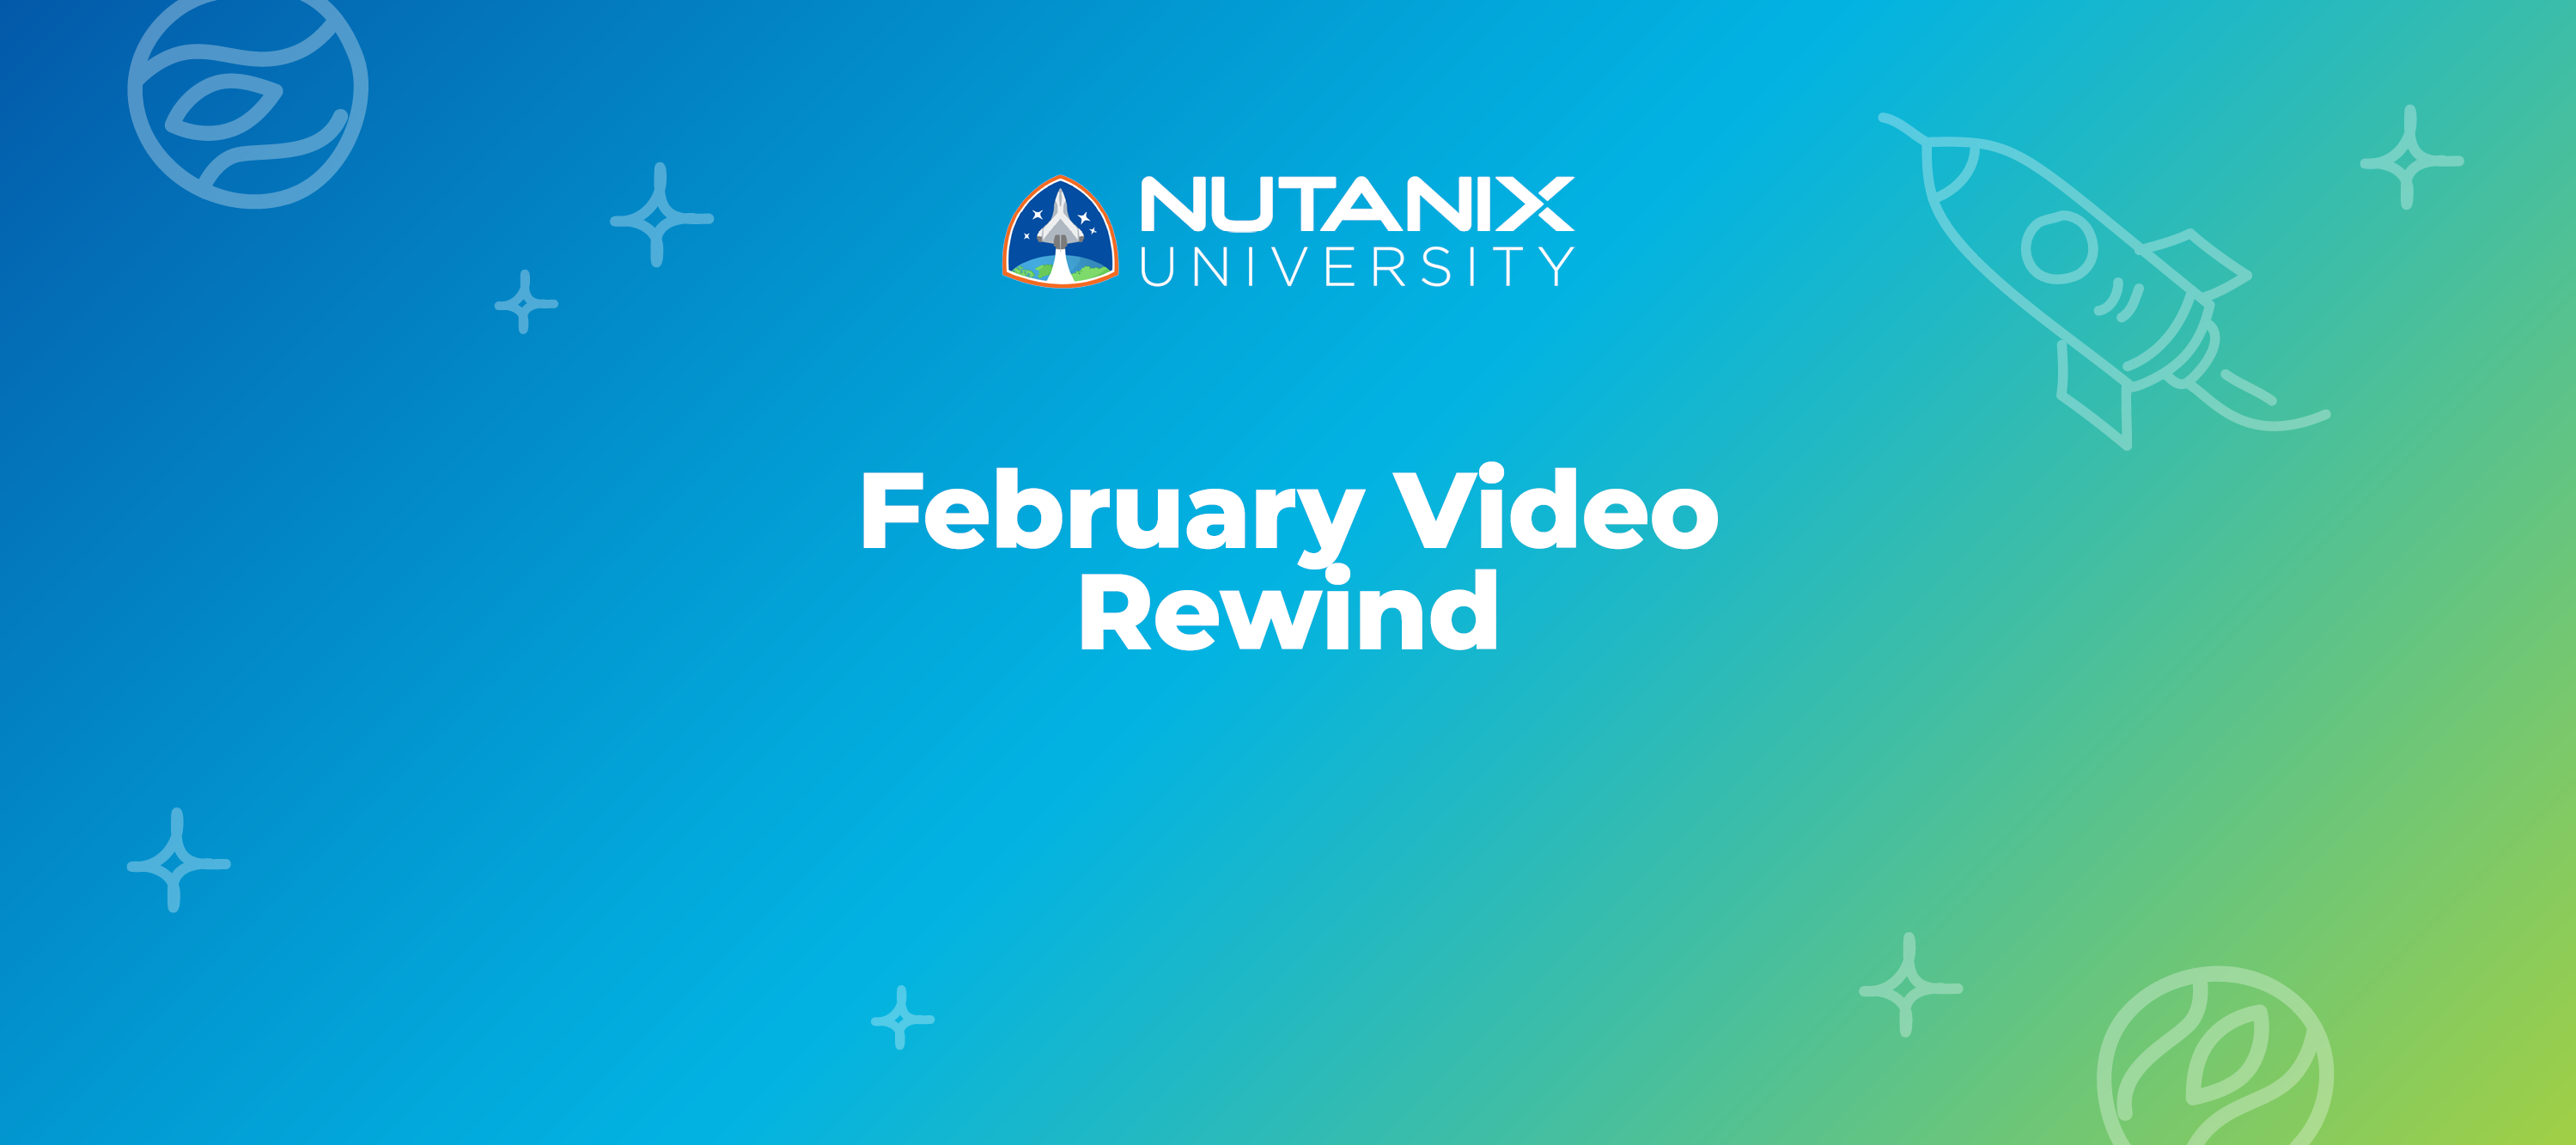 Nutanix University February Video Rewind